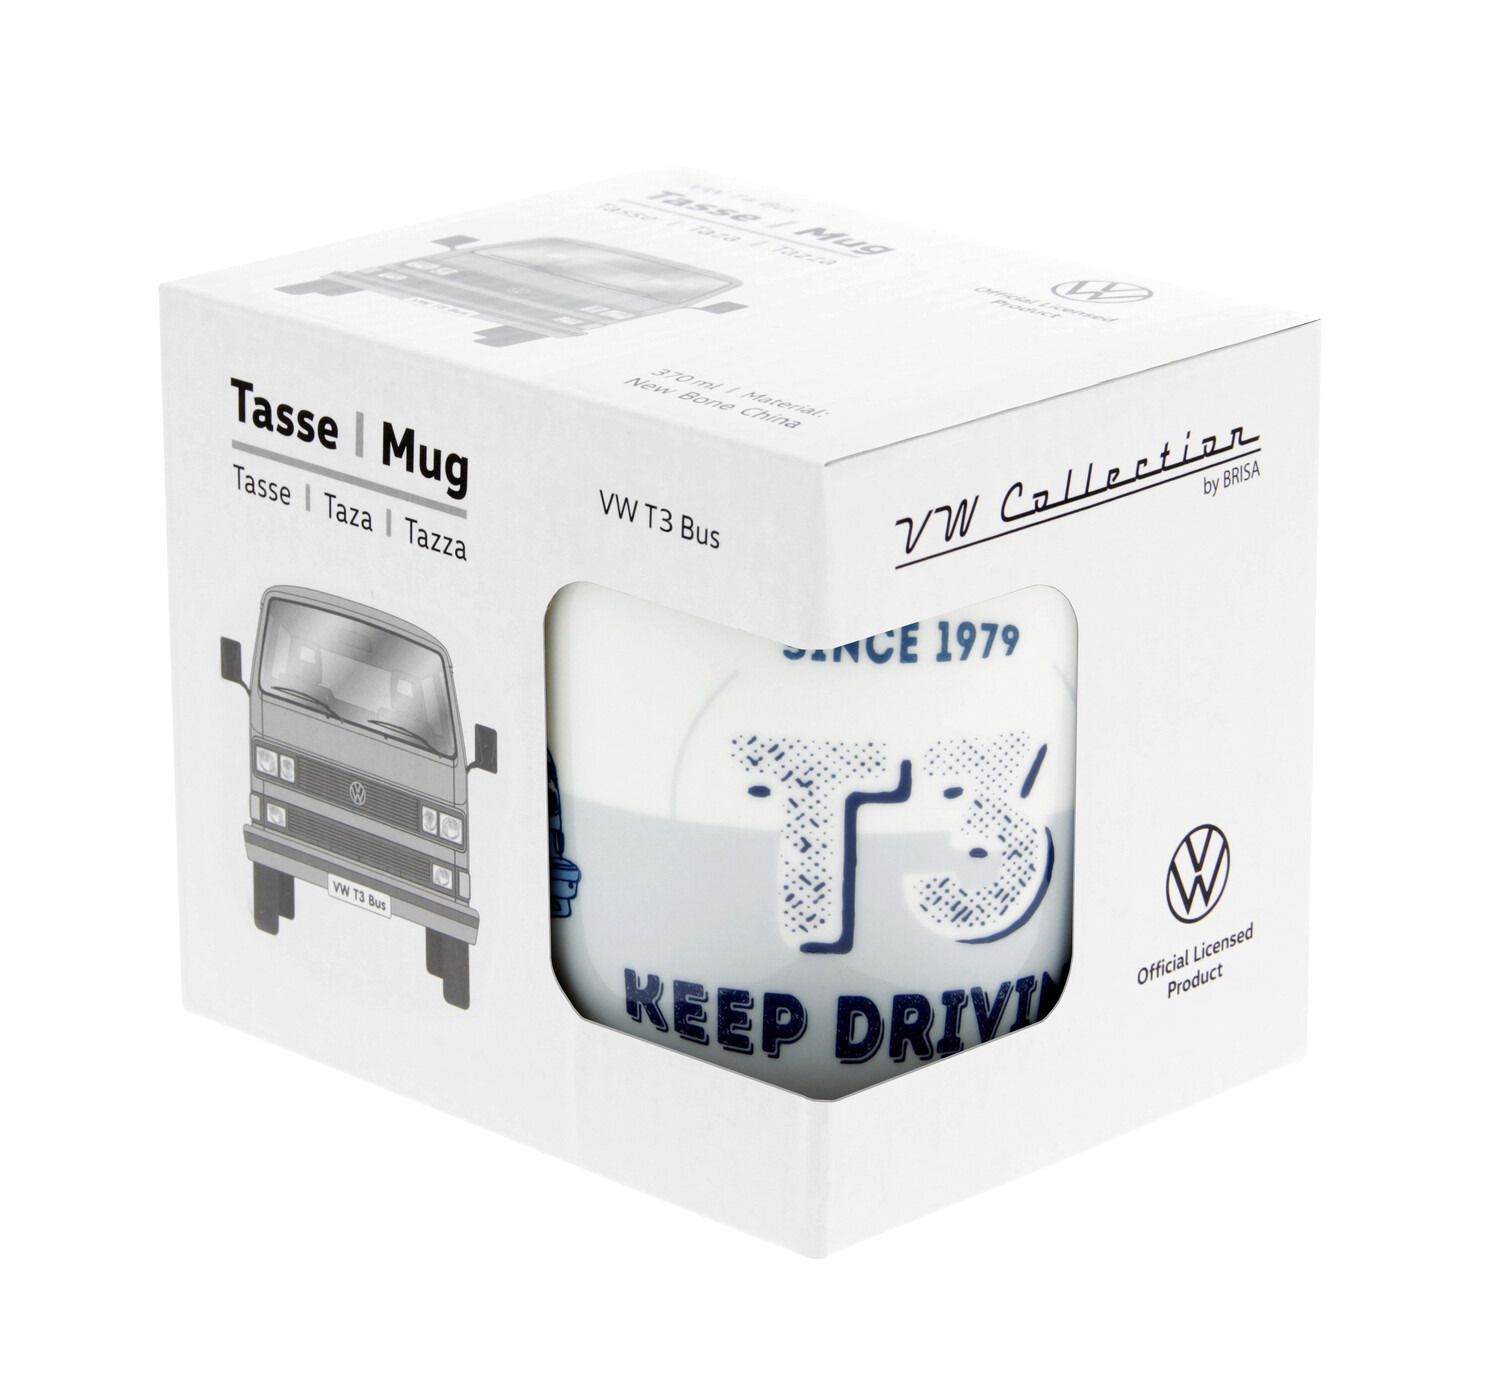 VW T3 Bulli Bus coffee mug 370ml